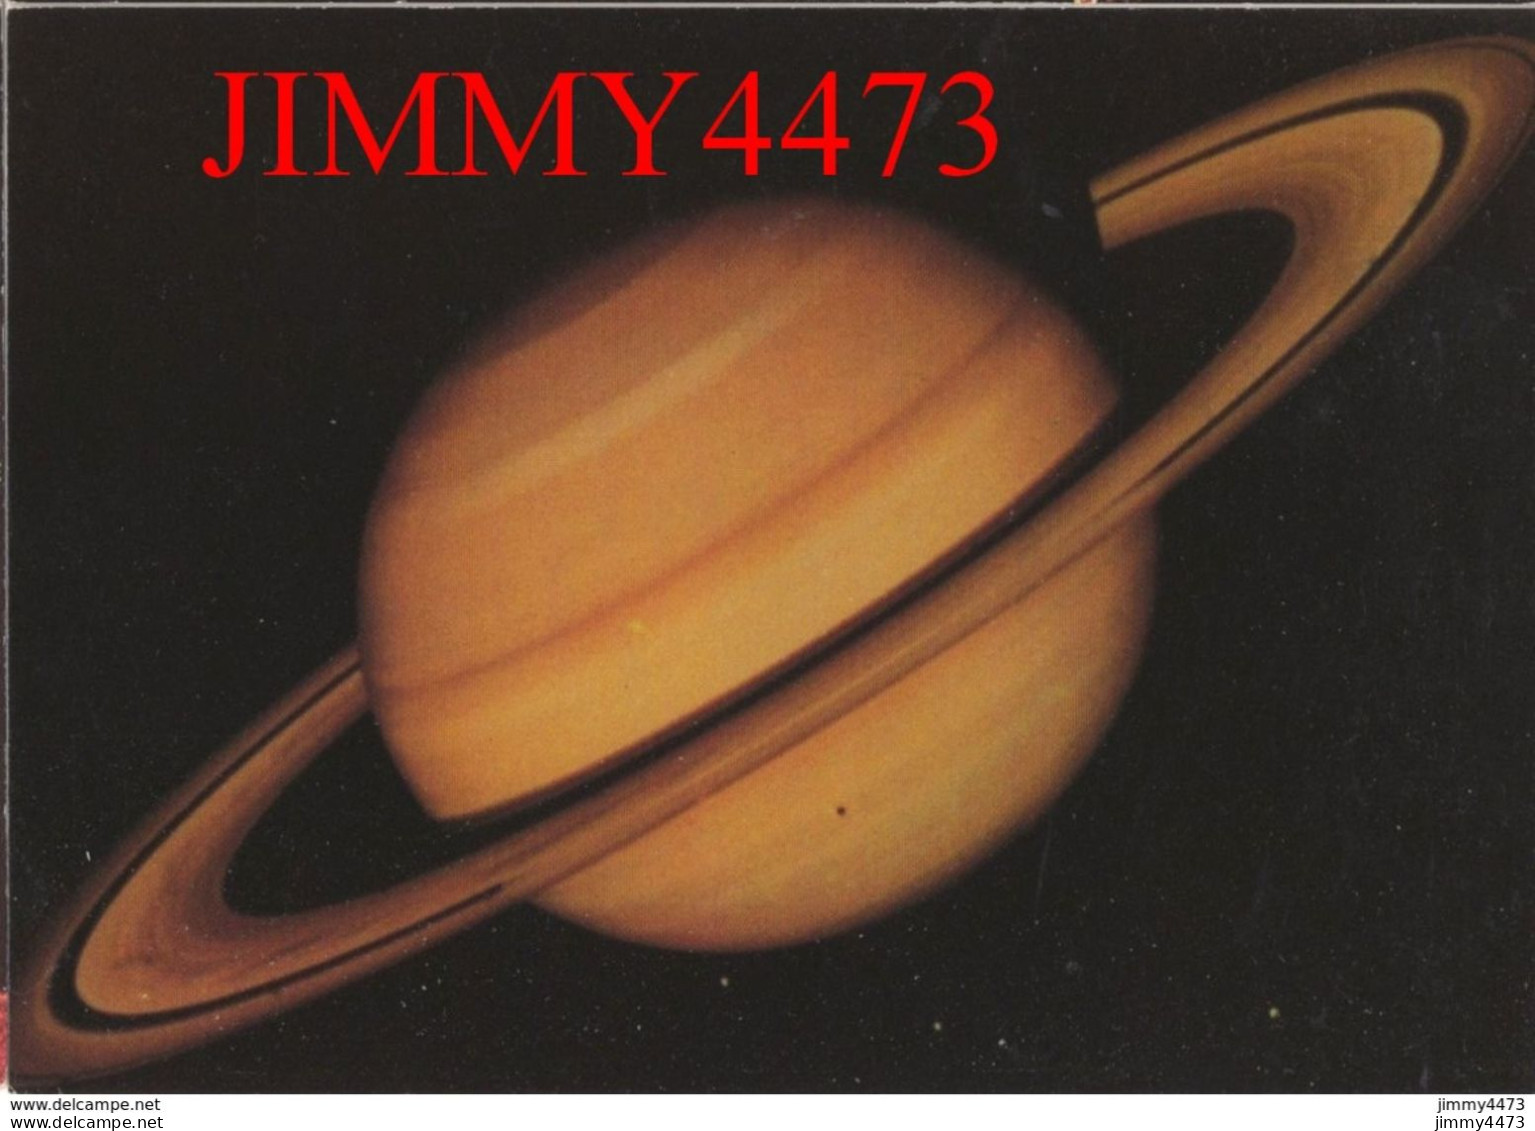 CPM - Saturne - En 1980 Voyager 2 Survole Sature + Texte Au Dos ( 1980 Voyager 2 - NASA ) - Imp. Valblor Strasbourg - Astronomia